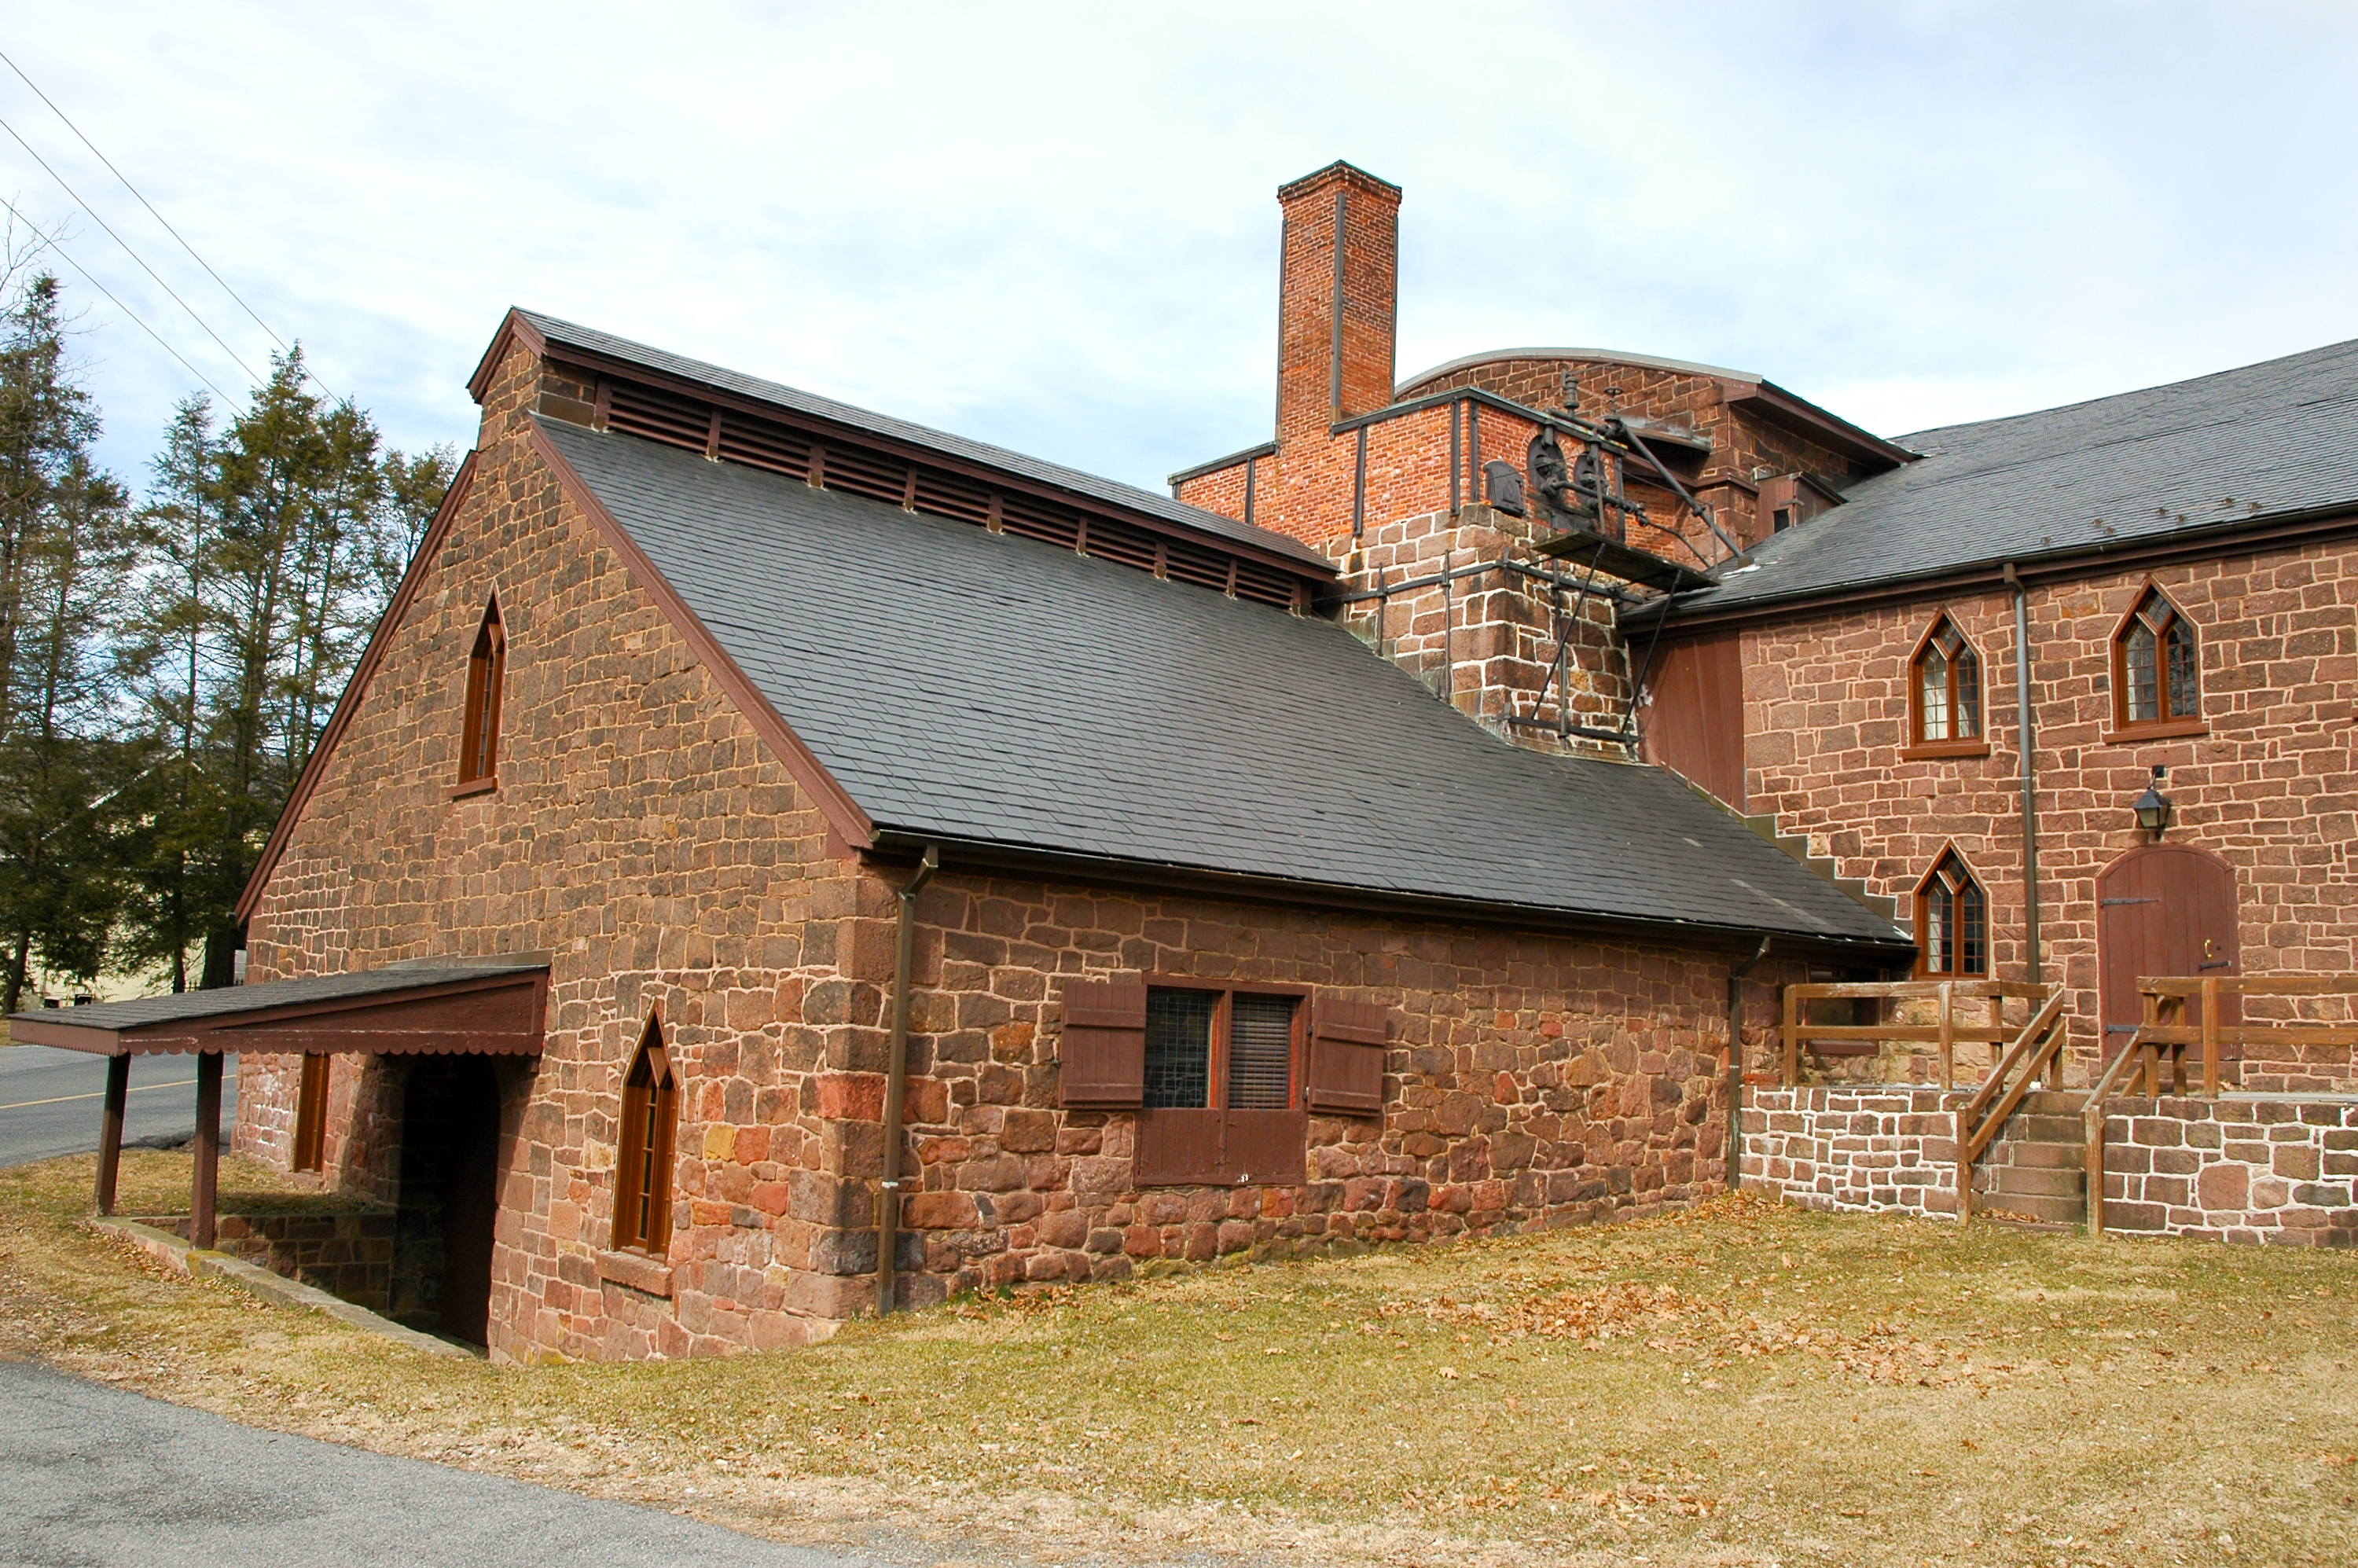 Cornwall, Pennsylvania Iron Furnace Building National Historic Landmark